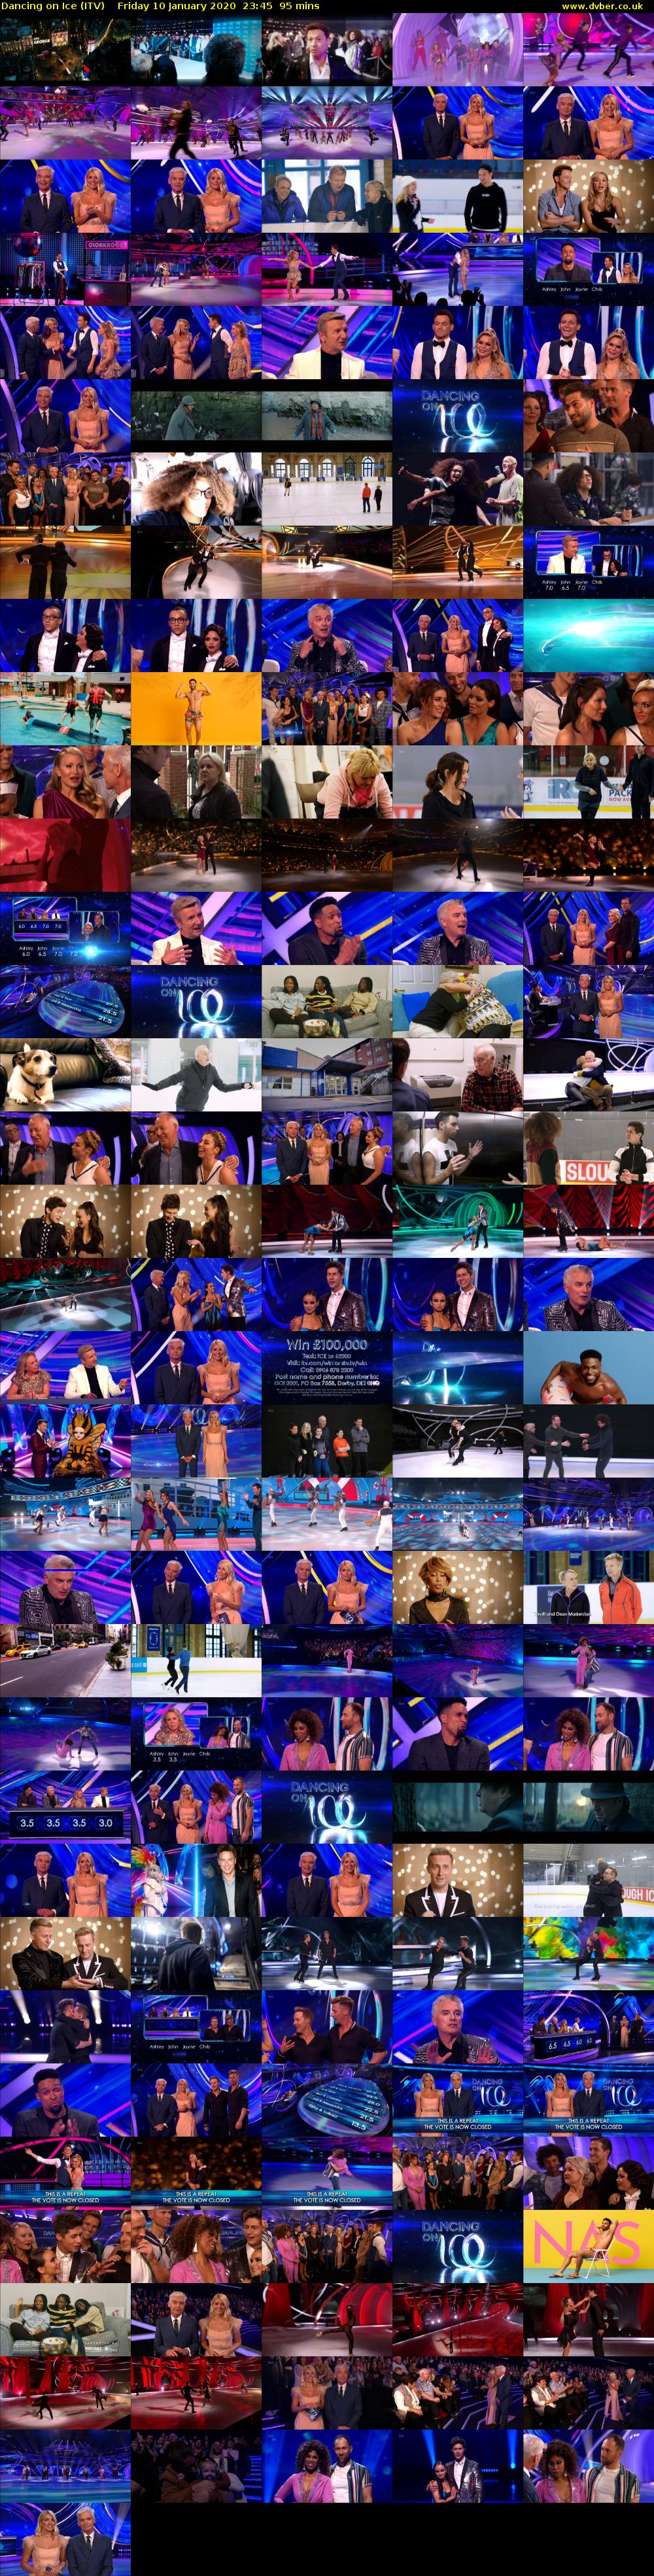 Dancing on Ice (ITV) Friday 10 January 2020 23:45 - 01:20